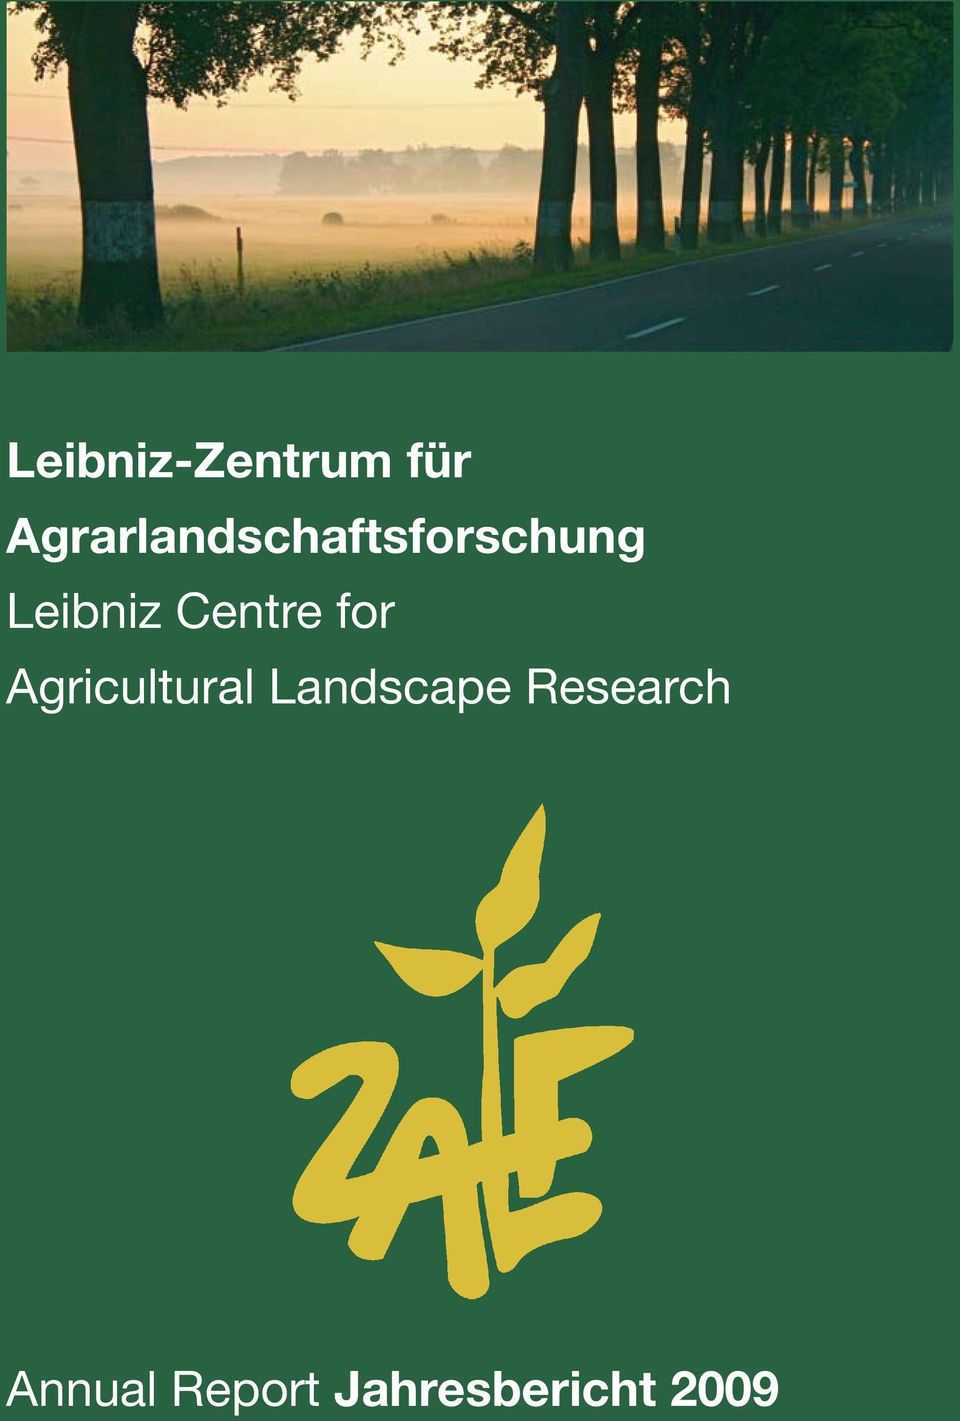 Leibniz Centre for Agricultural